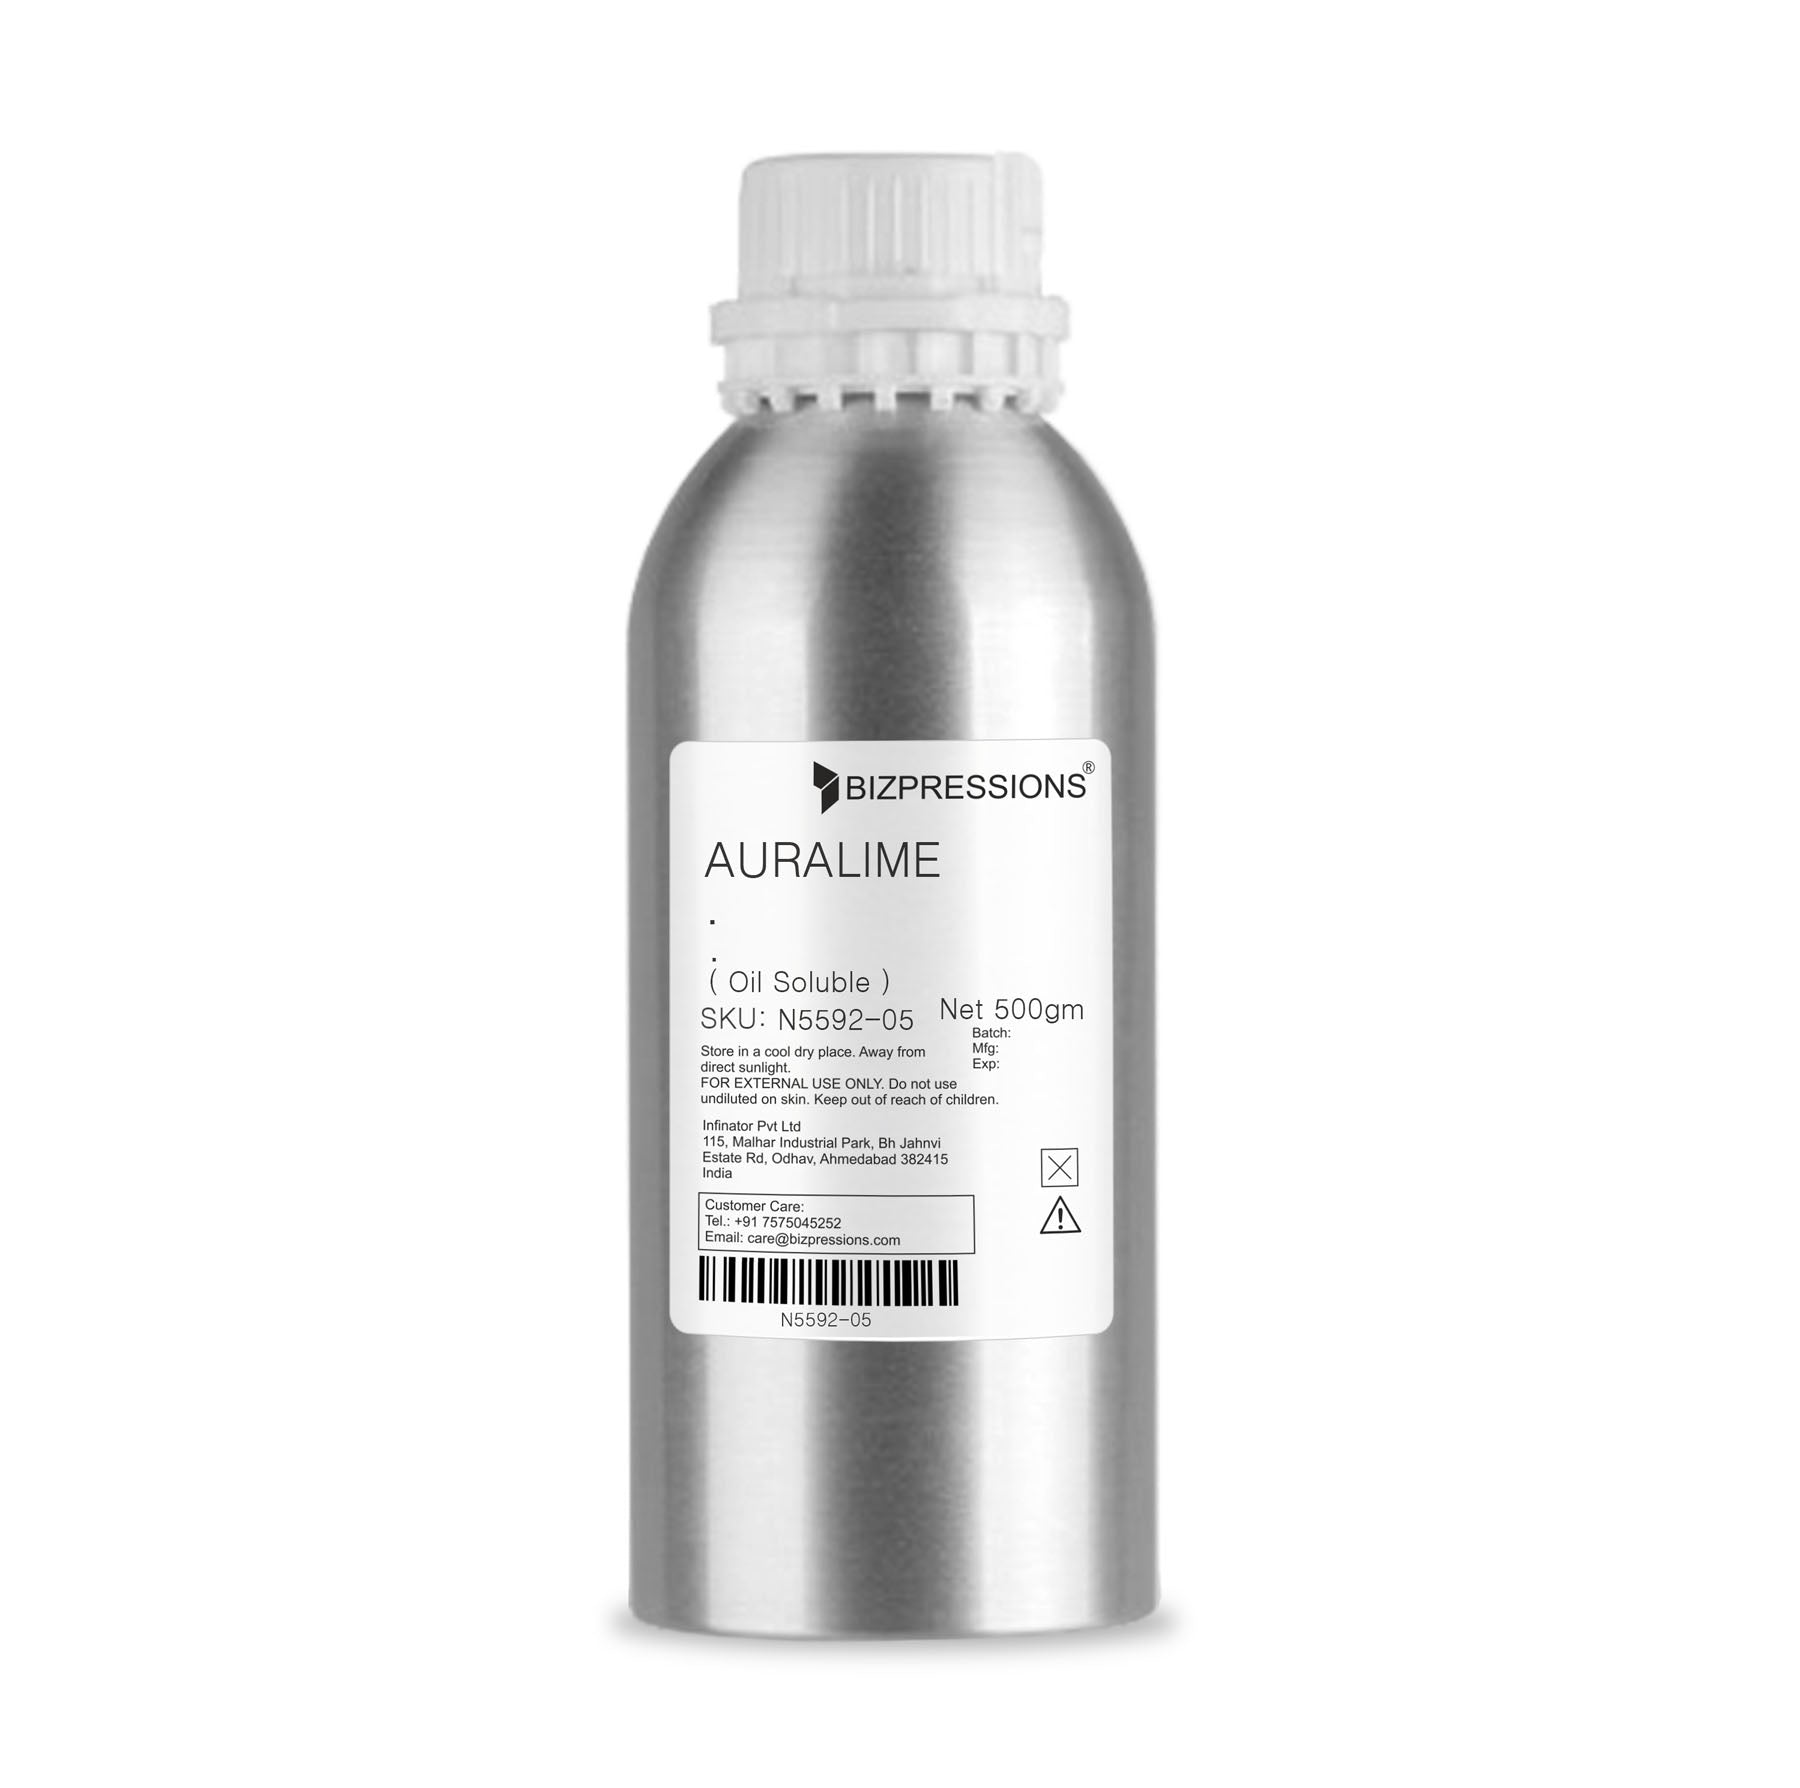 AURALIME - Fragrance ( Oil Soluble ) - 500 gm